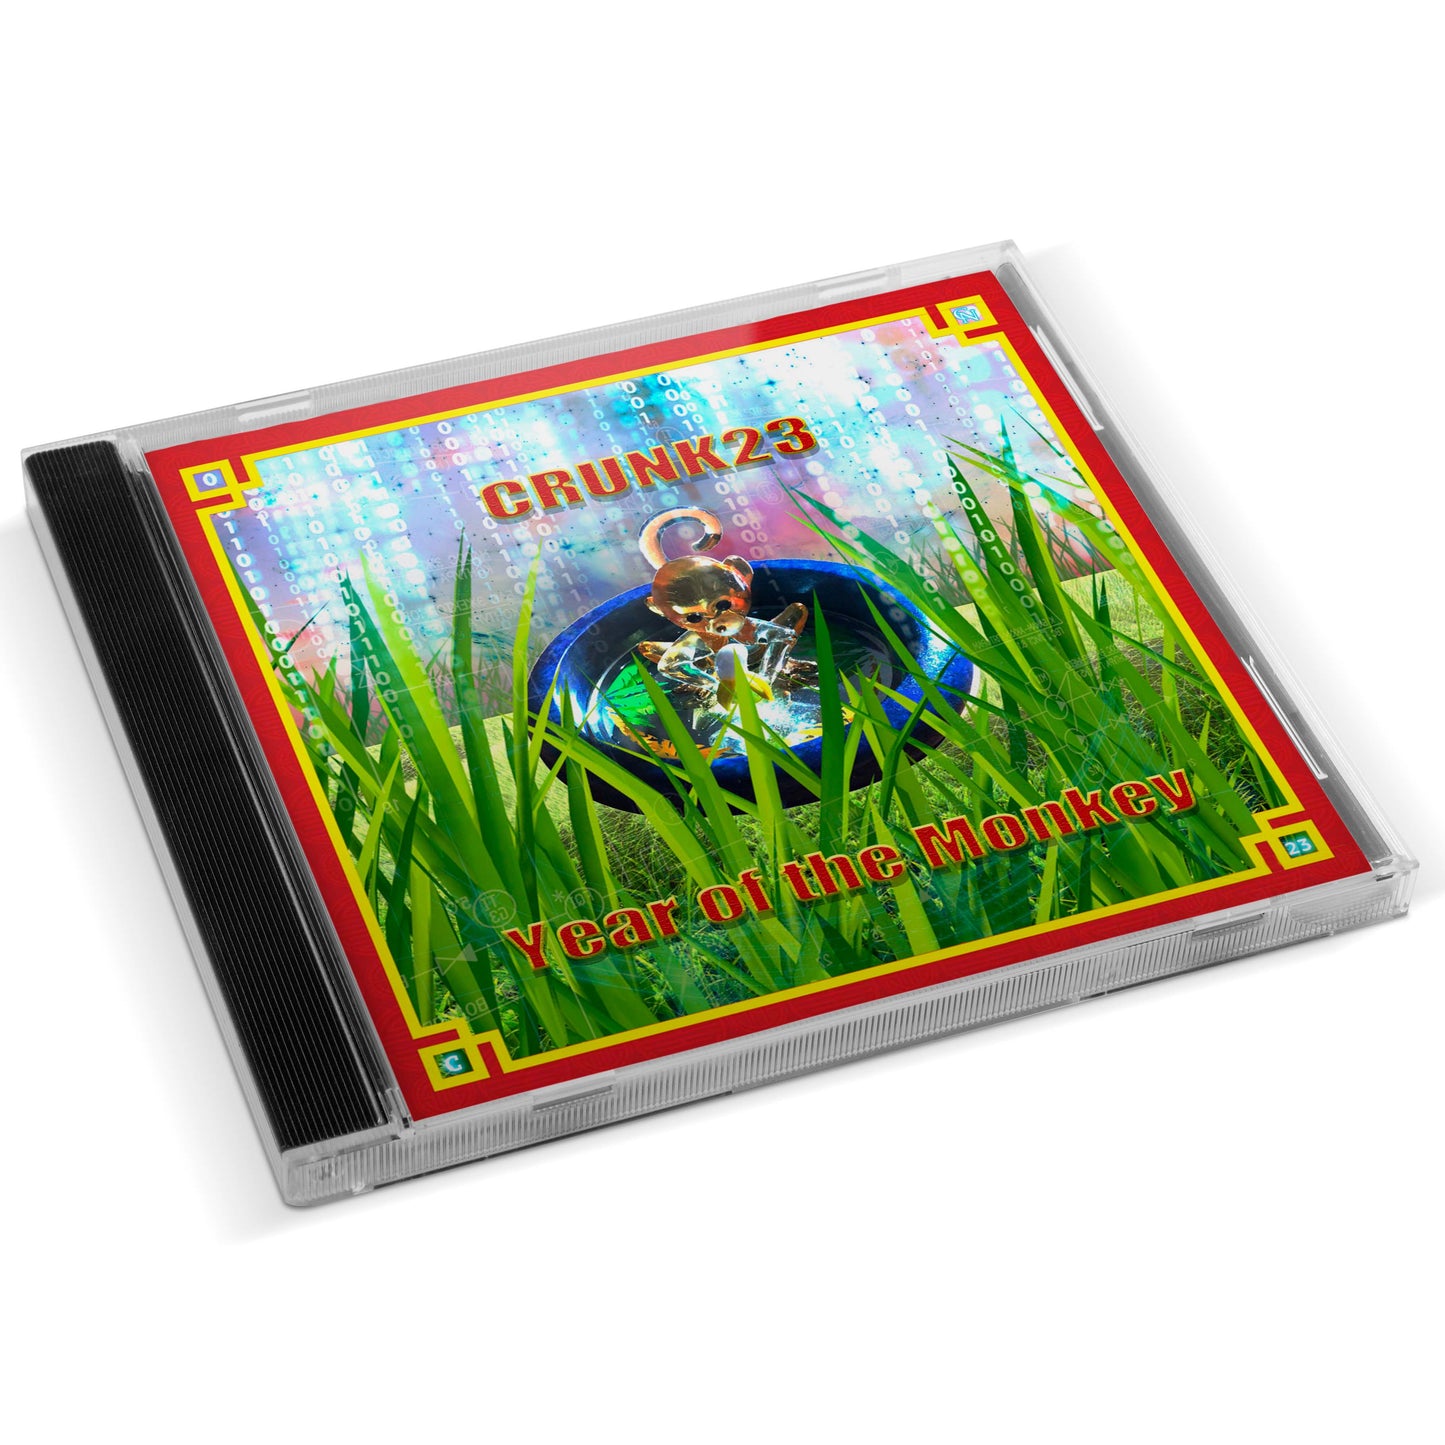 Crunk23 - Year Of The Monkey CD